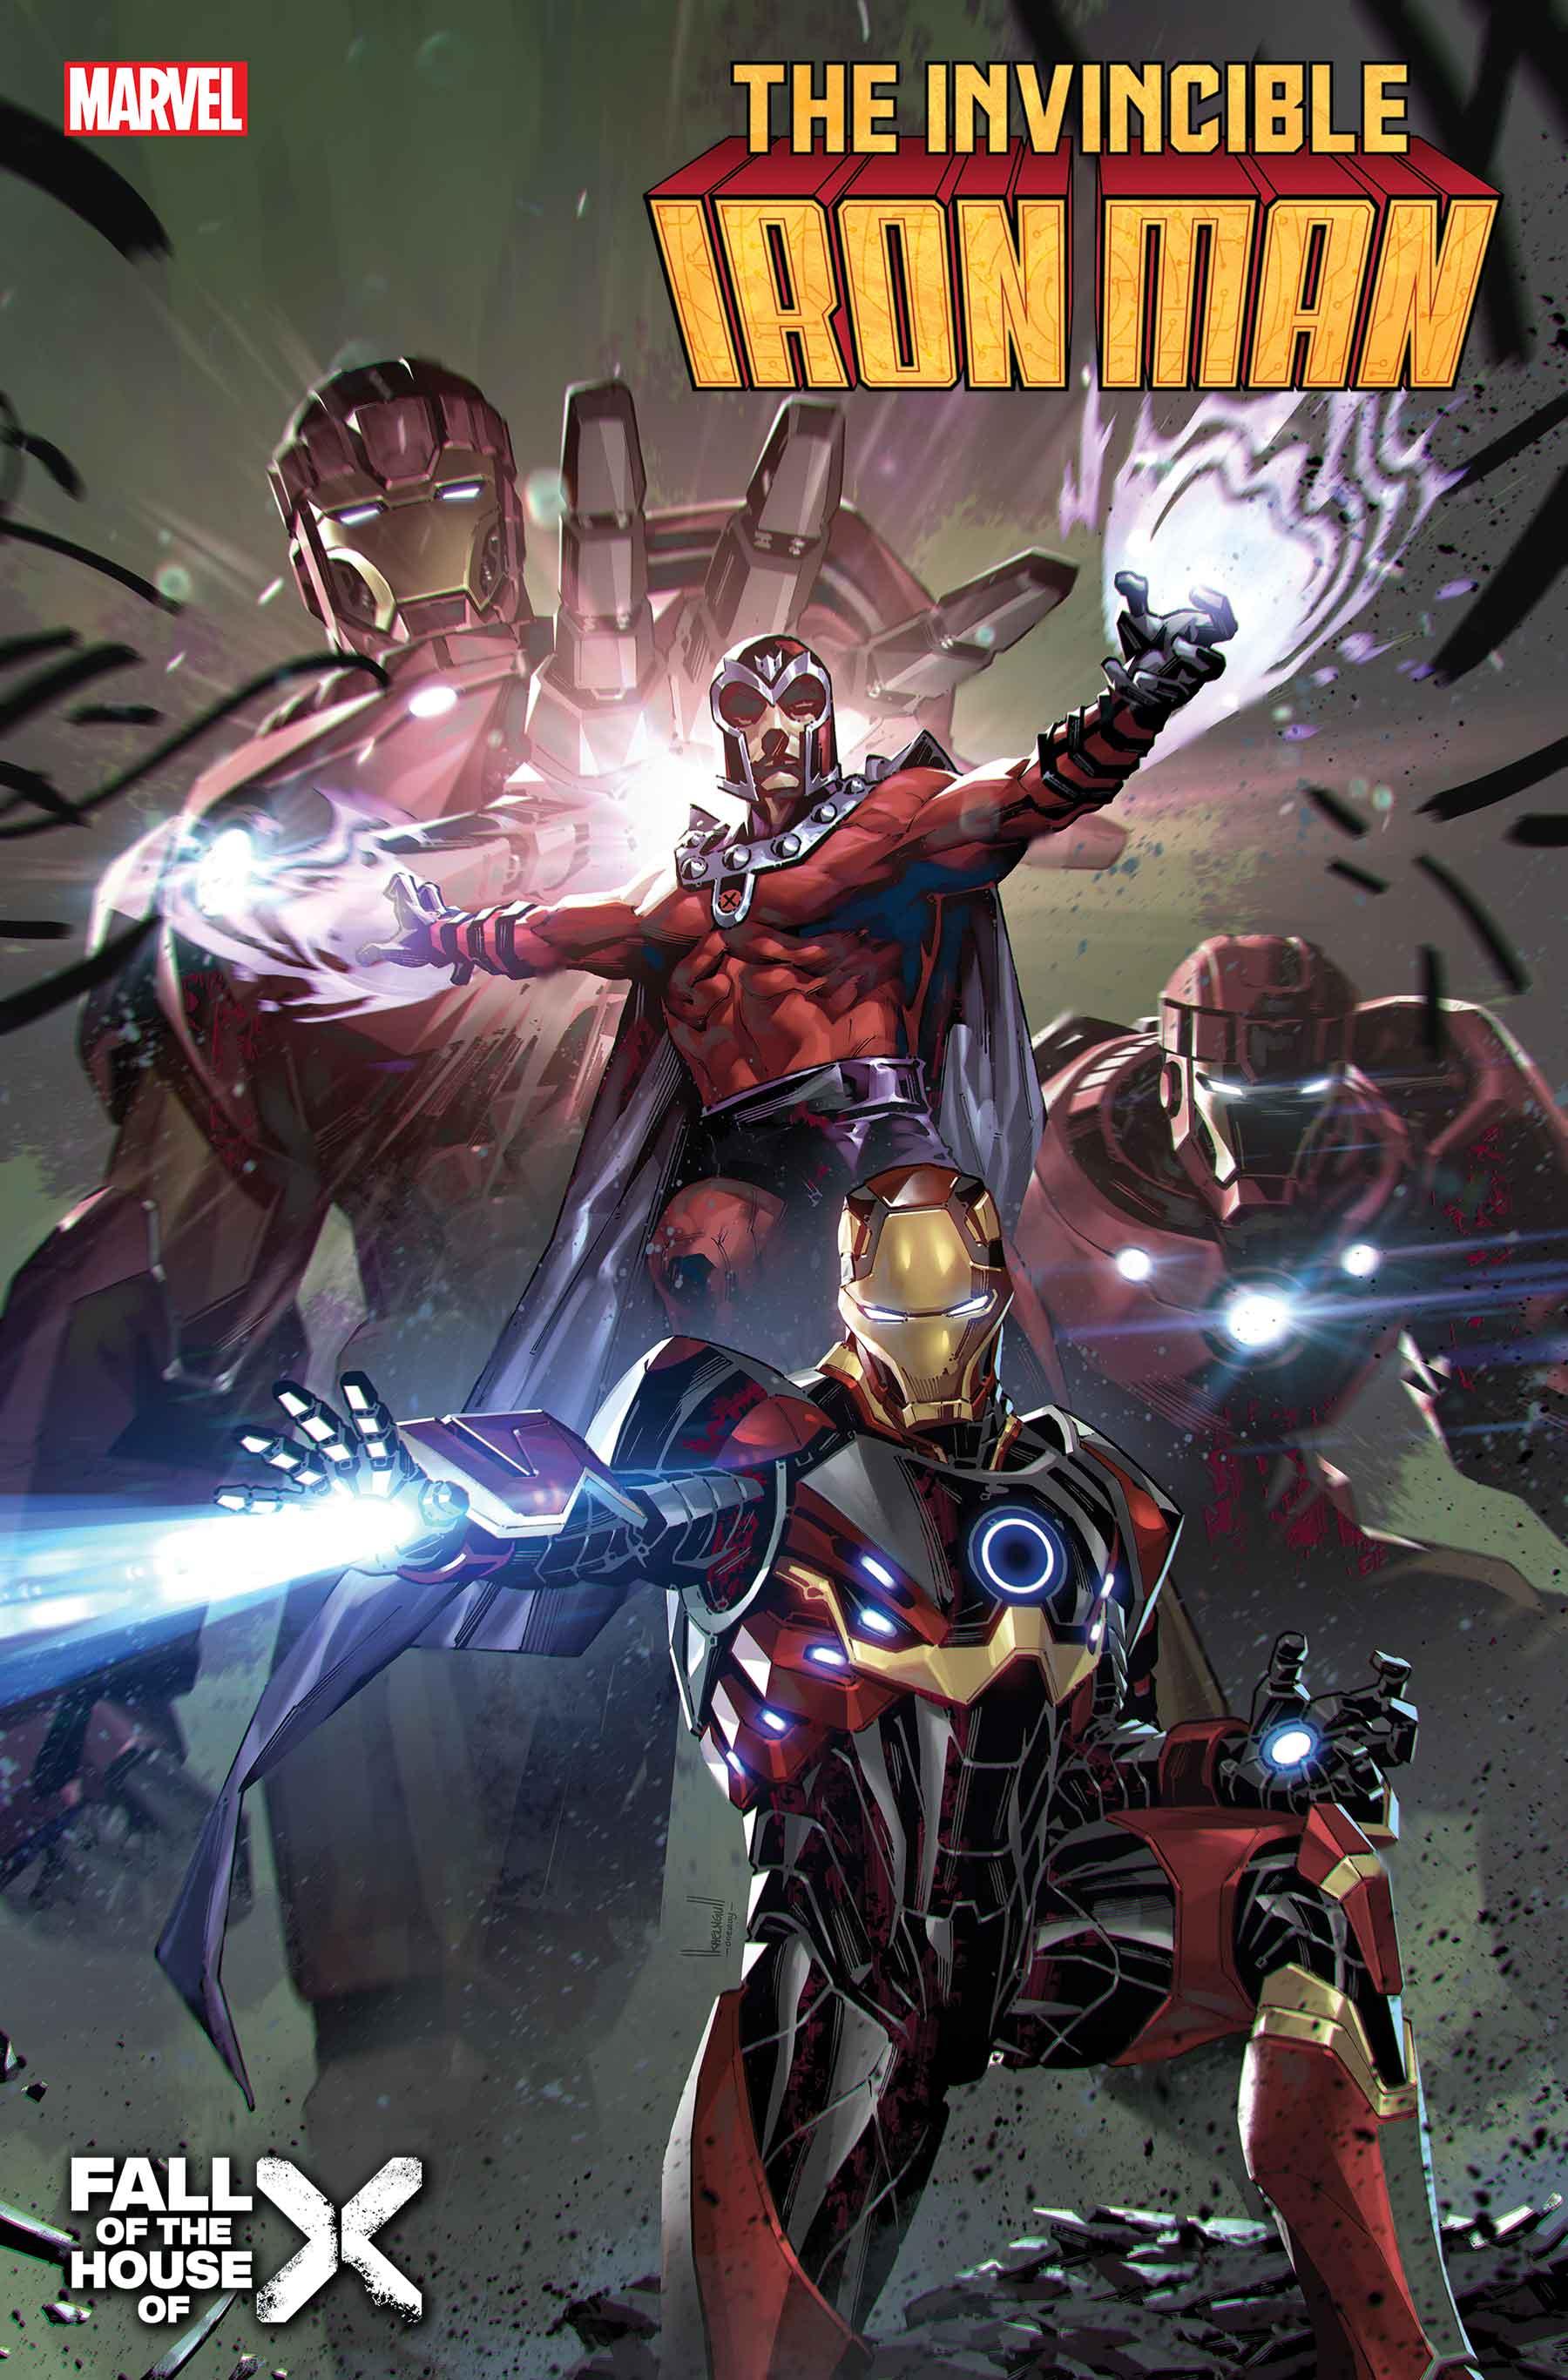 Invincible Iron Man #18 cover art